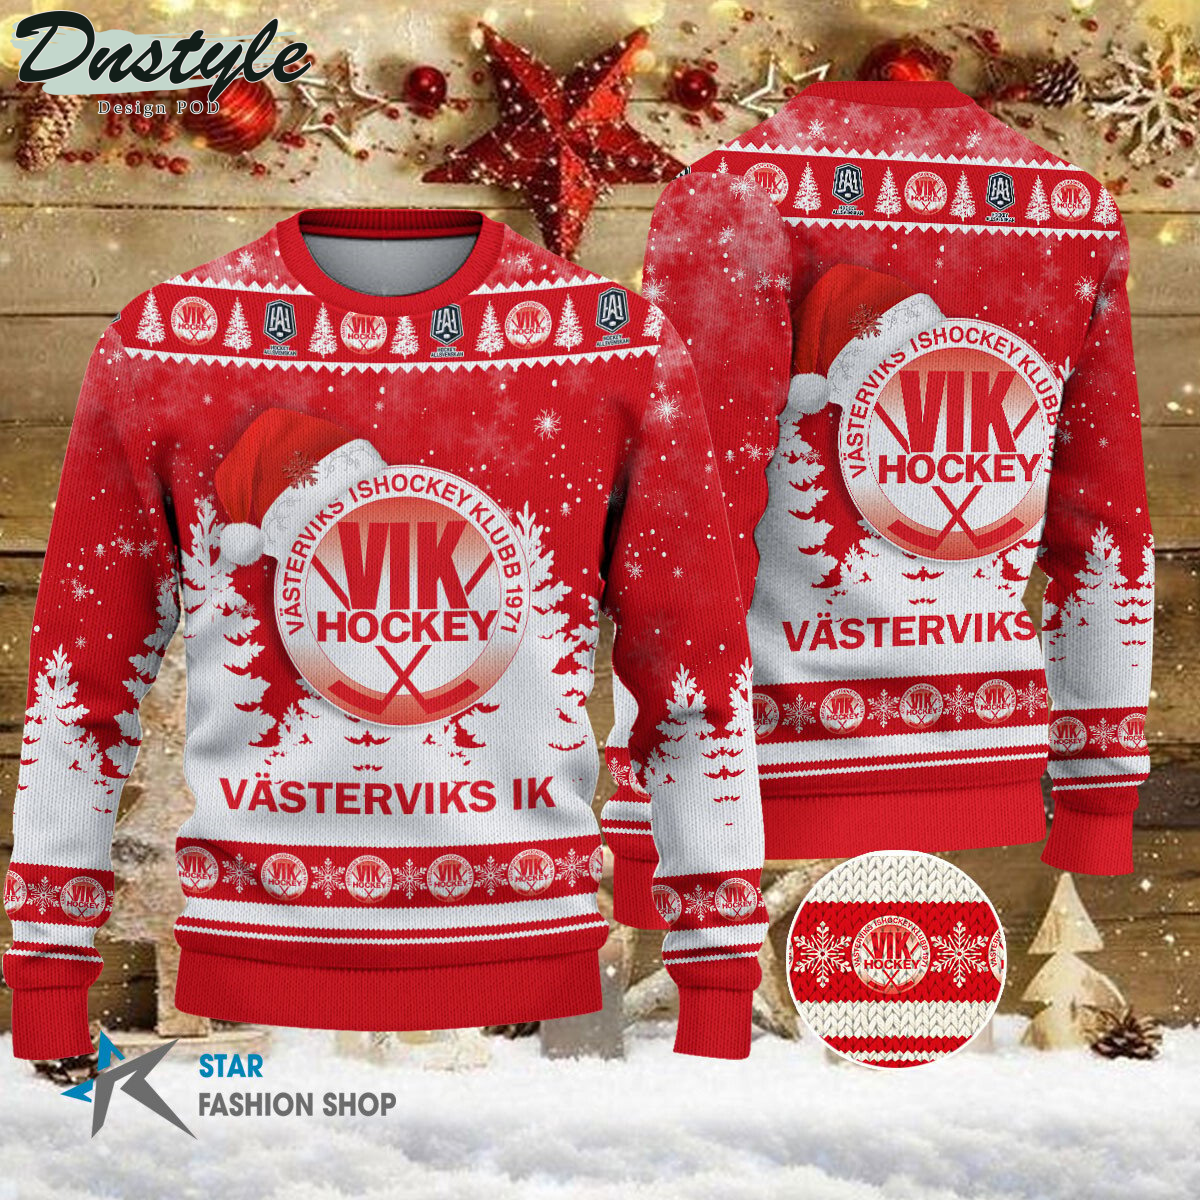 Västerviks IK ugly christmas sweater